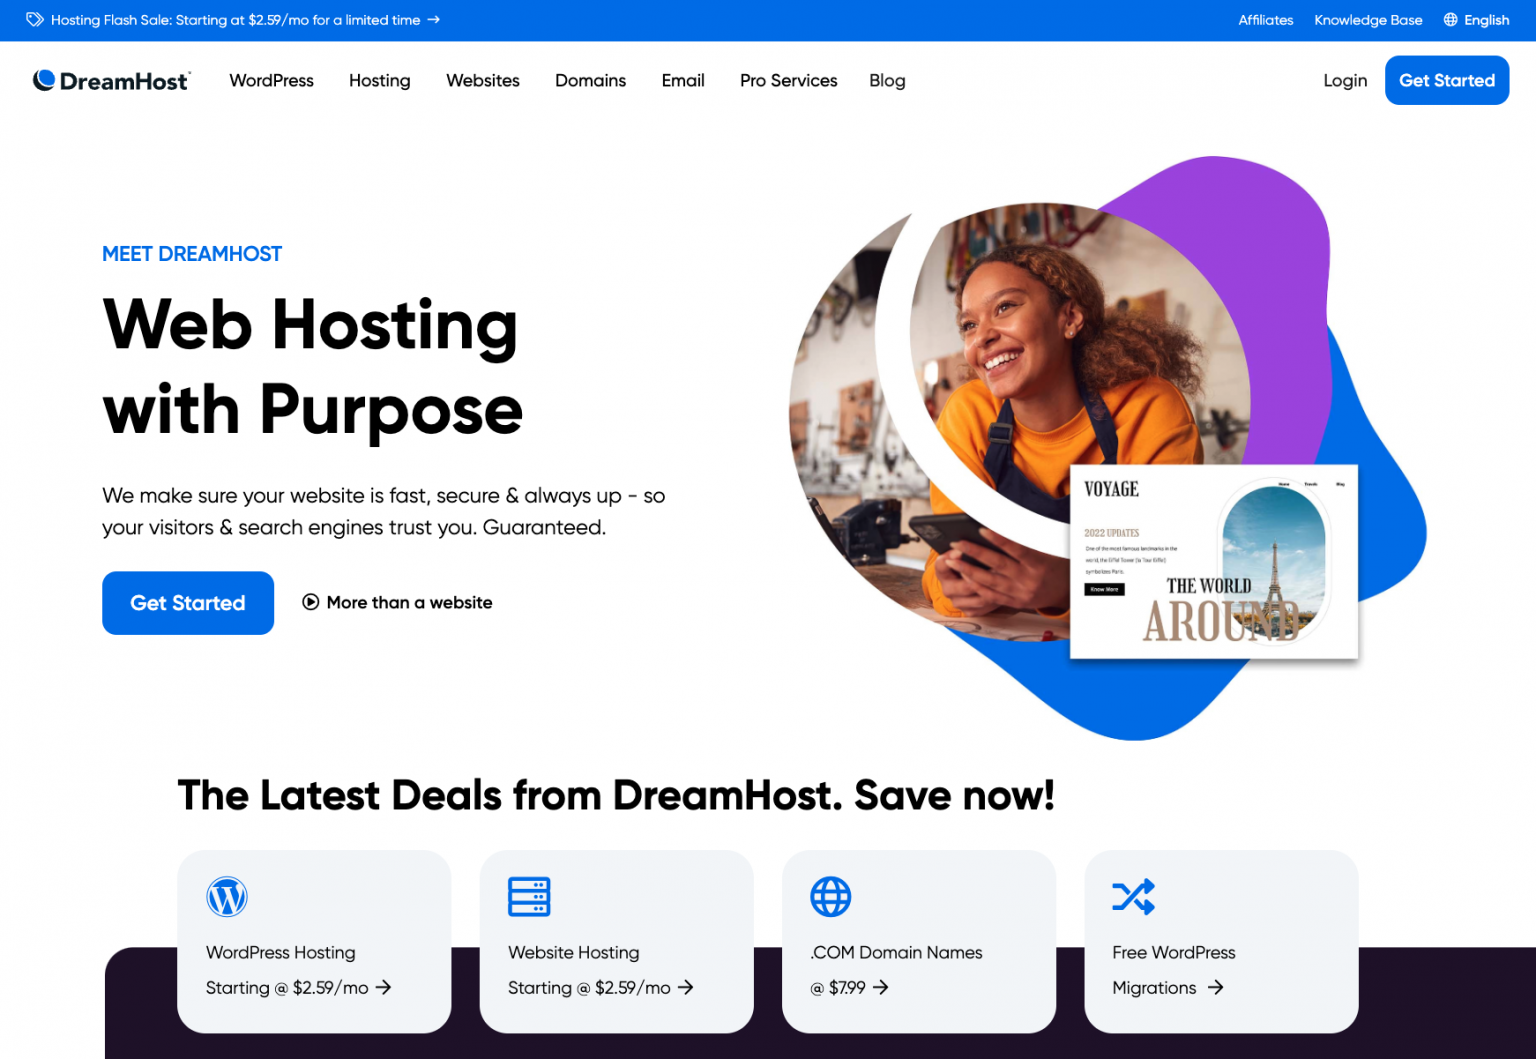 DreamHost Website Hosting Review